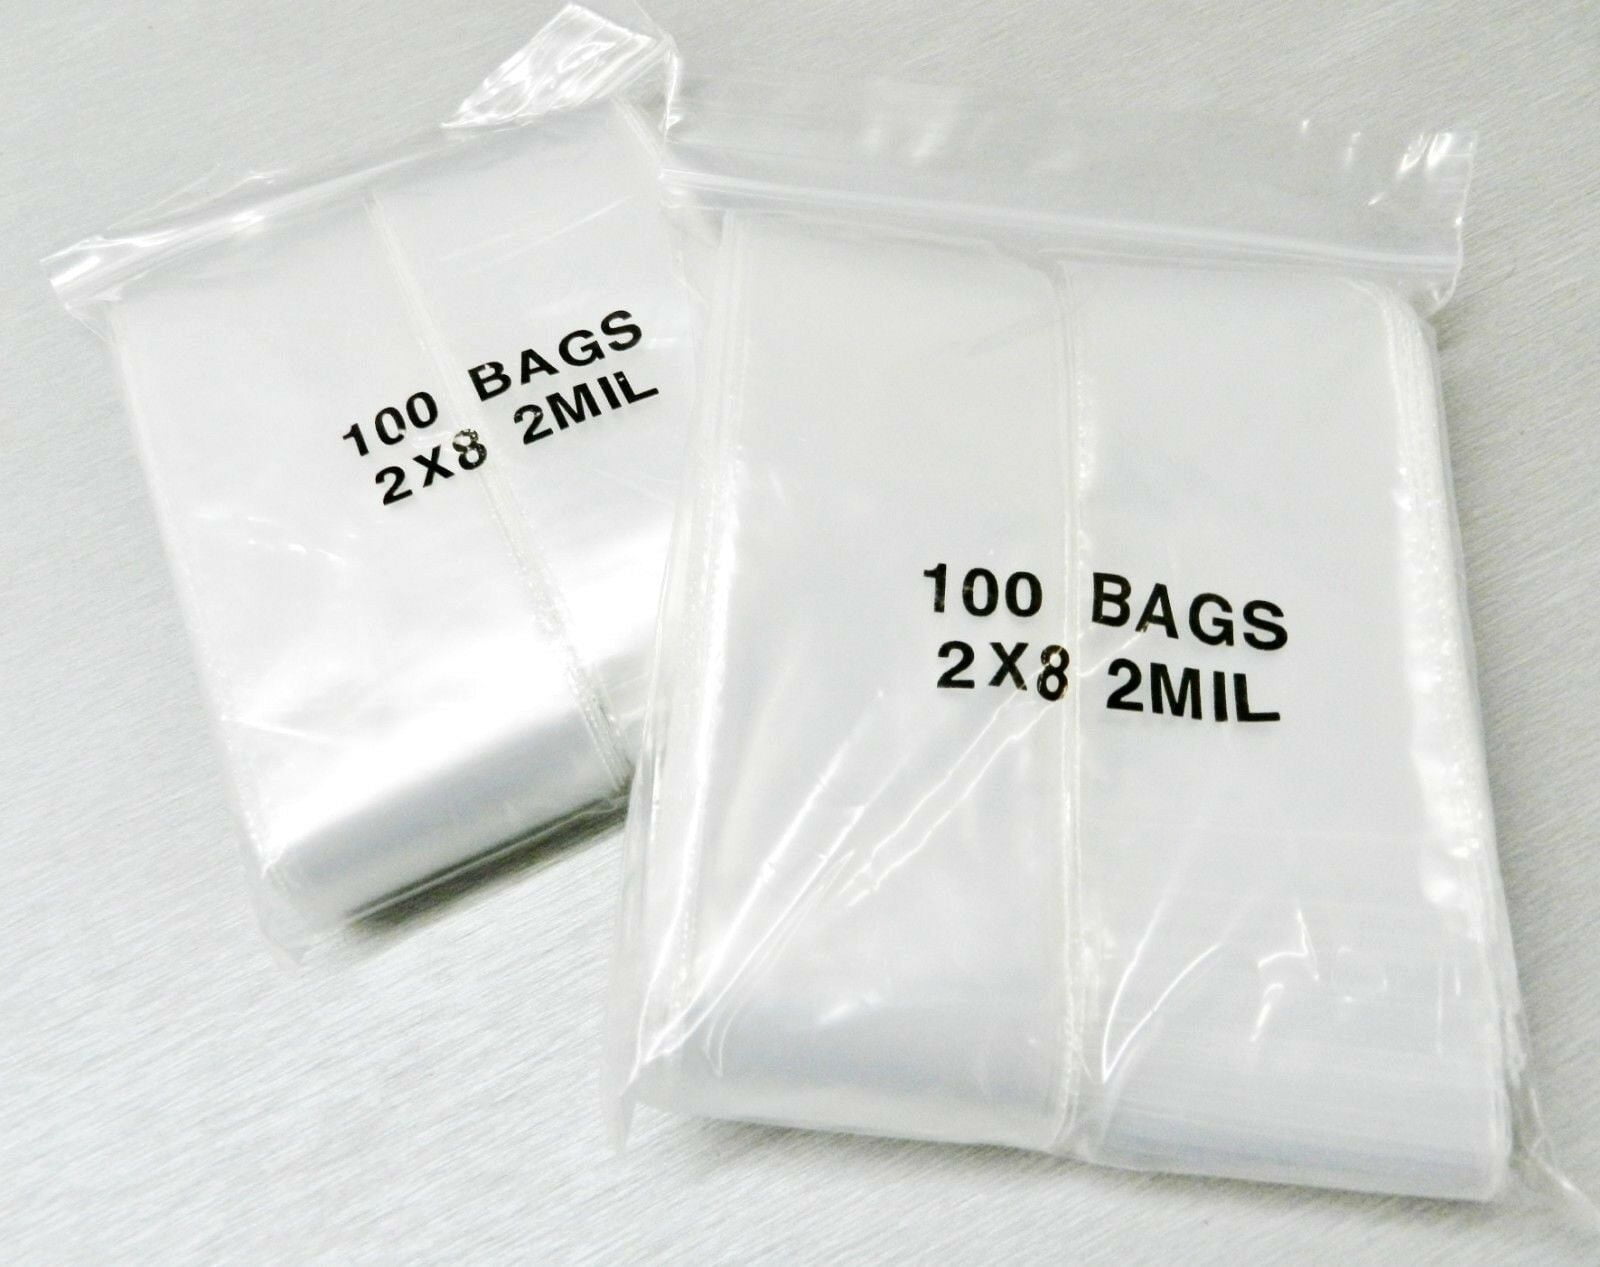 100 Clear Reclosable Plastic Bags Top Zip Lock Resealable Baggies 2 Mil 3"x8" 